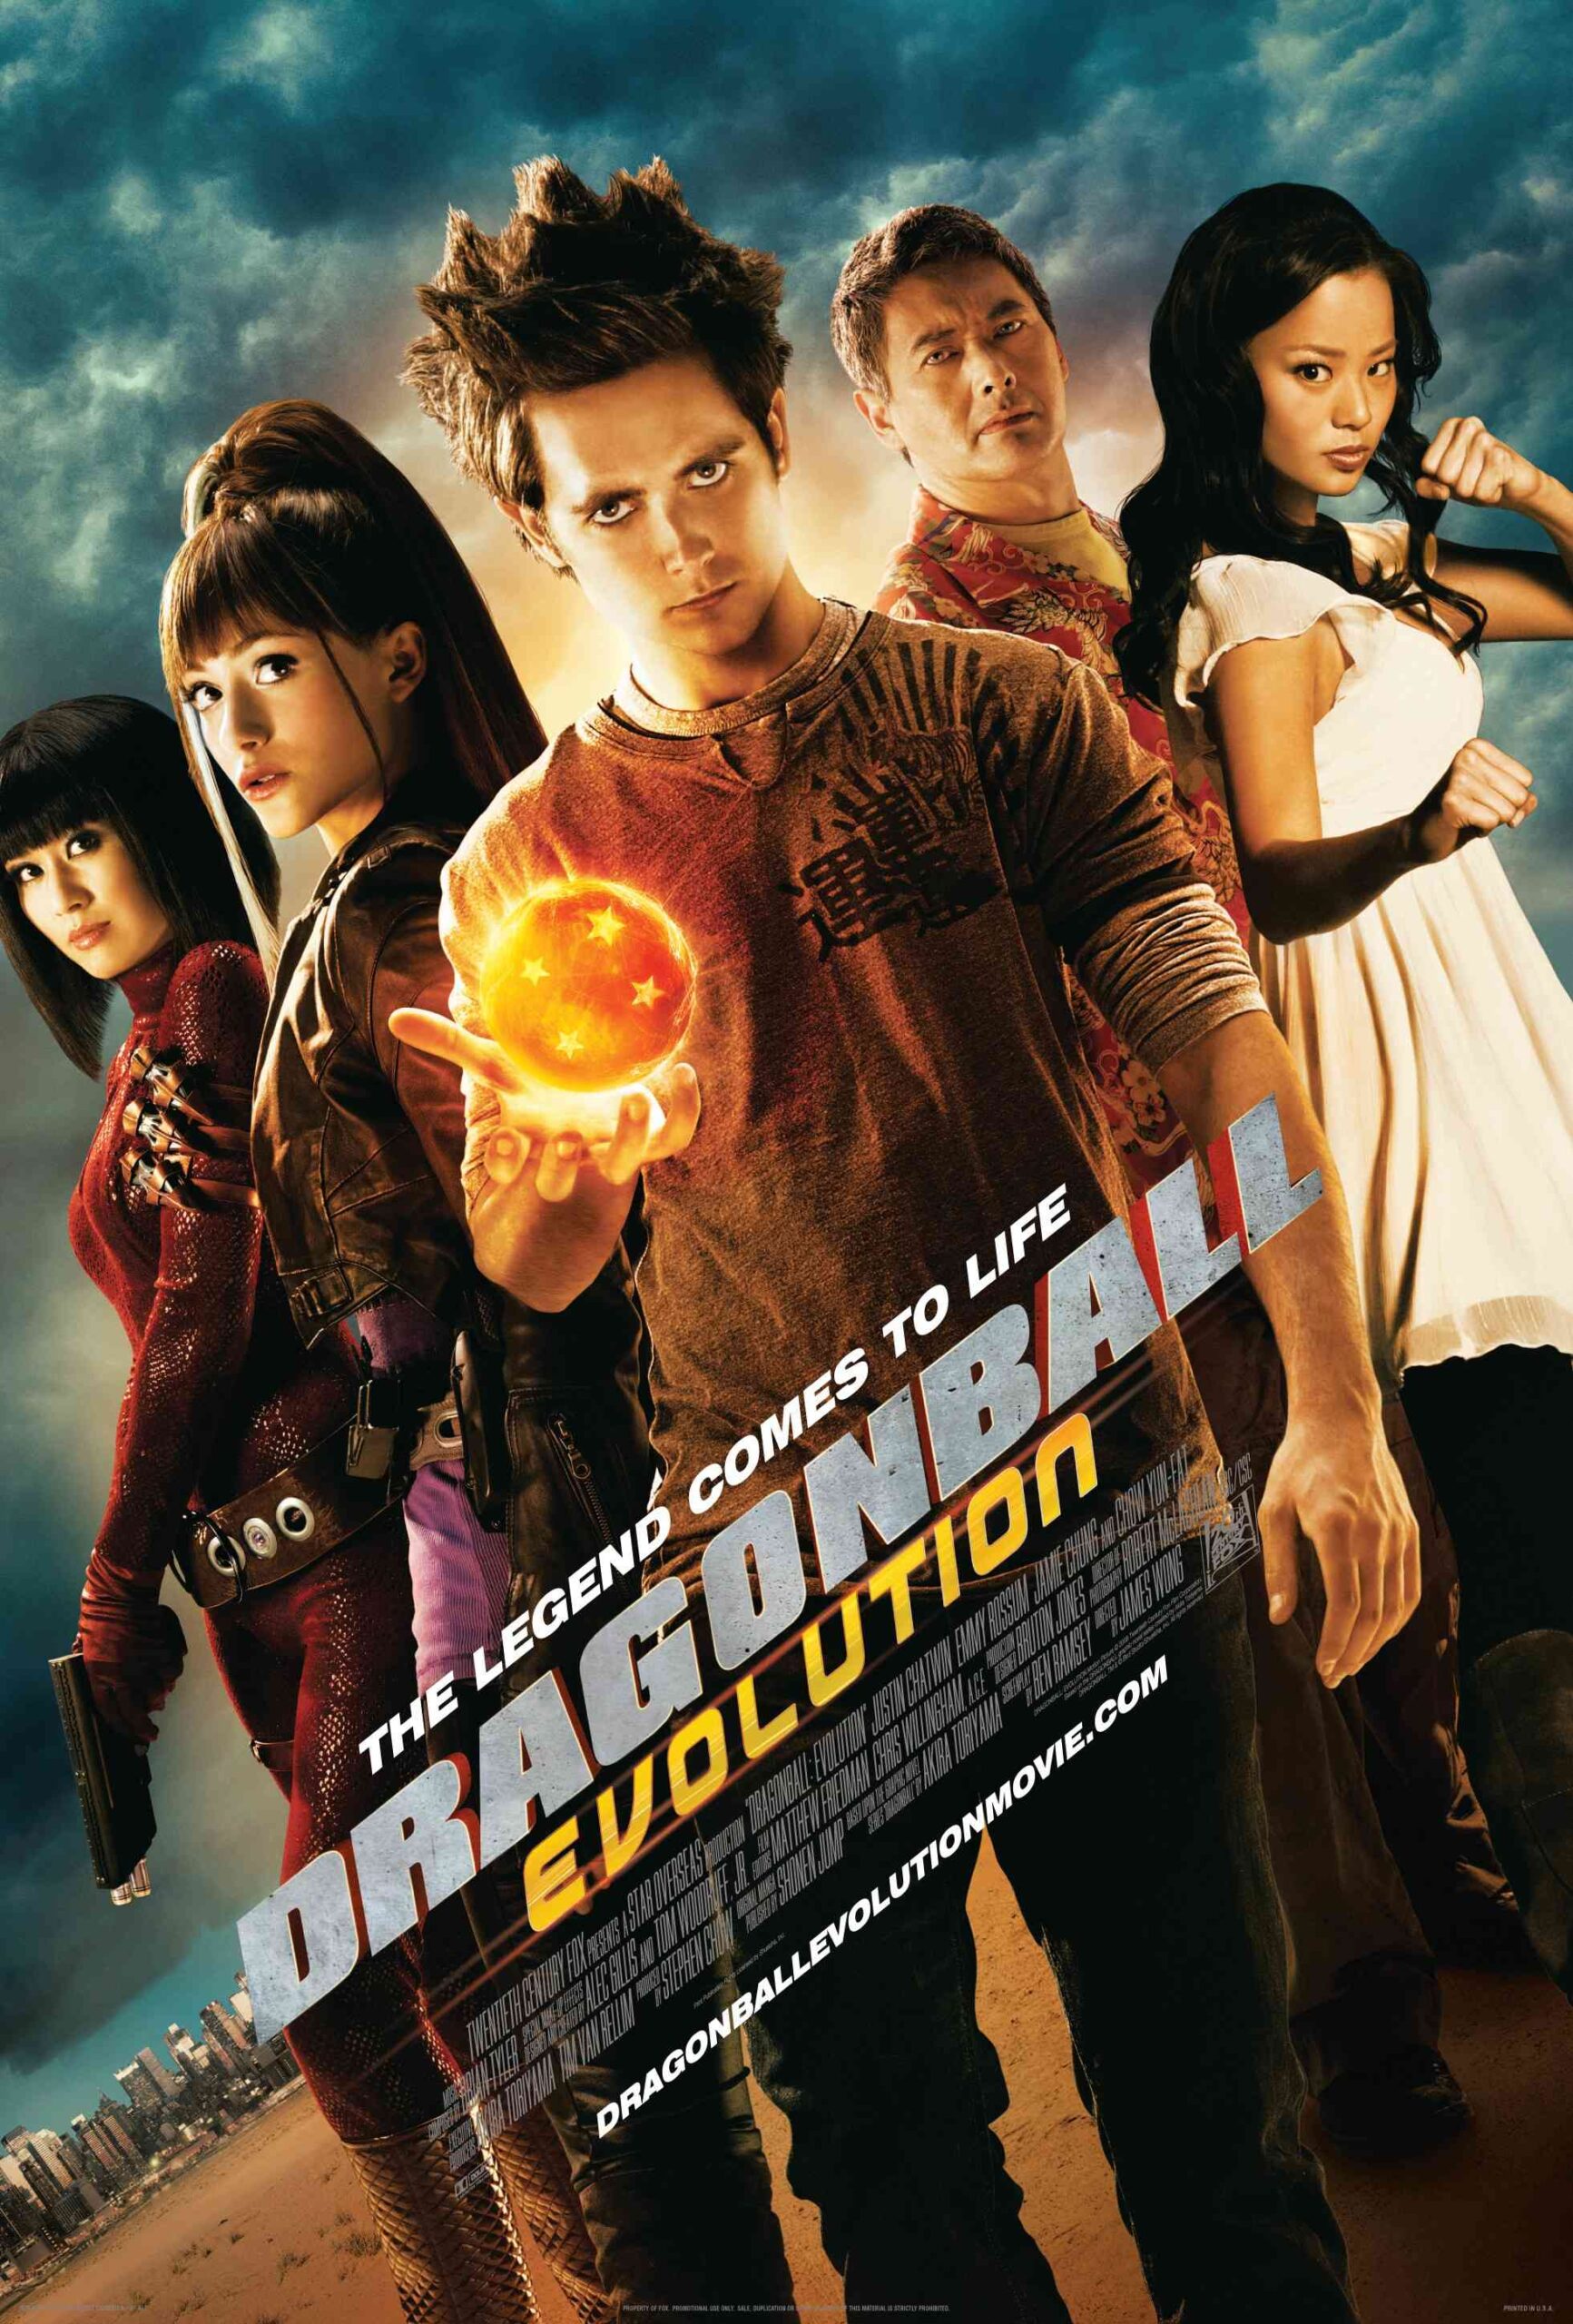 FULL MOVIE: Dragonball Evolution (2009) [Action]